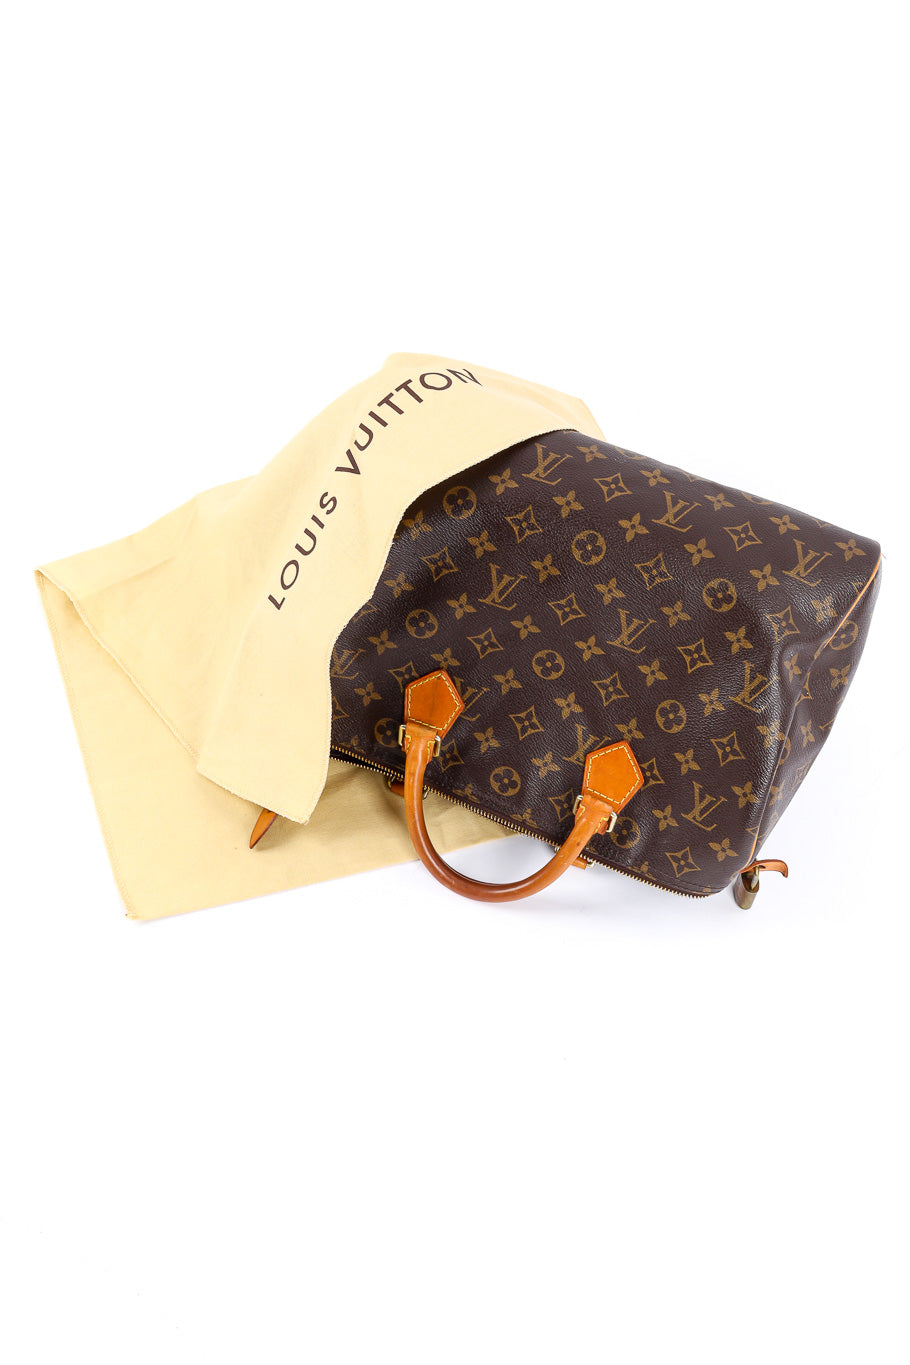 Louis Vuitton classic monogram speedy 30 bag with dust-bag @recessla